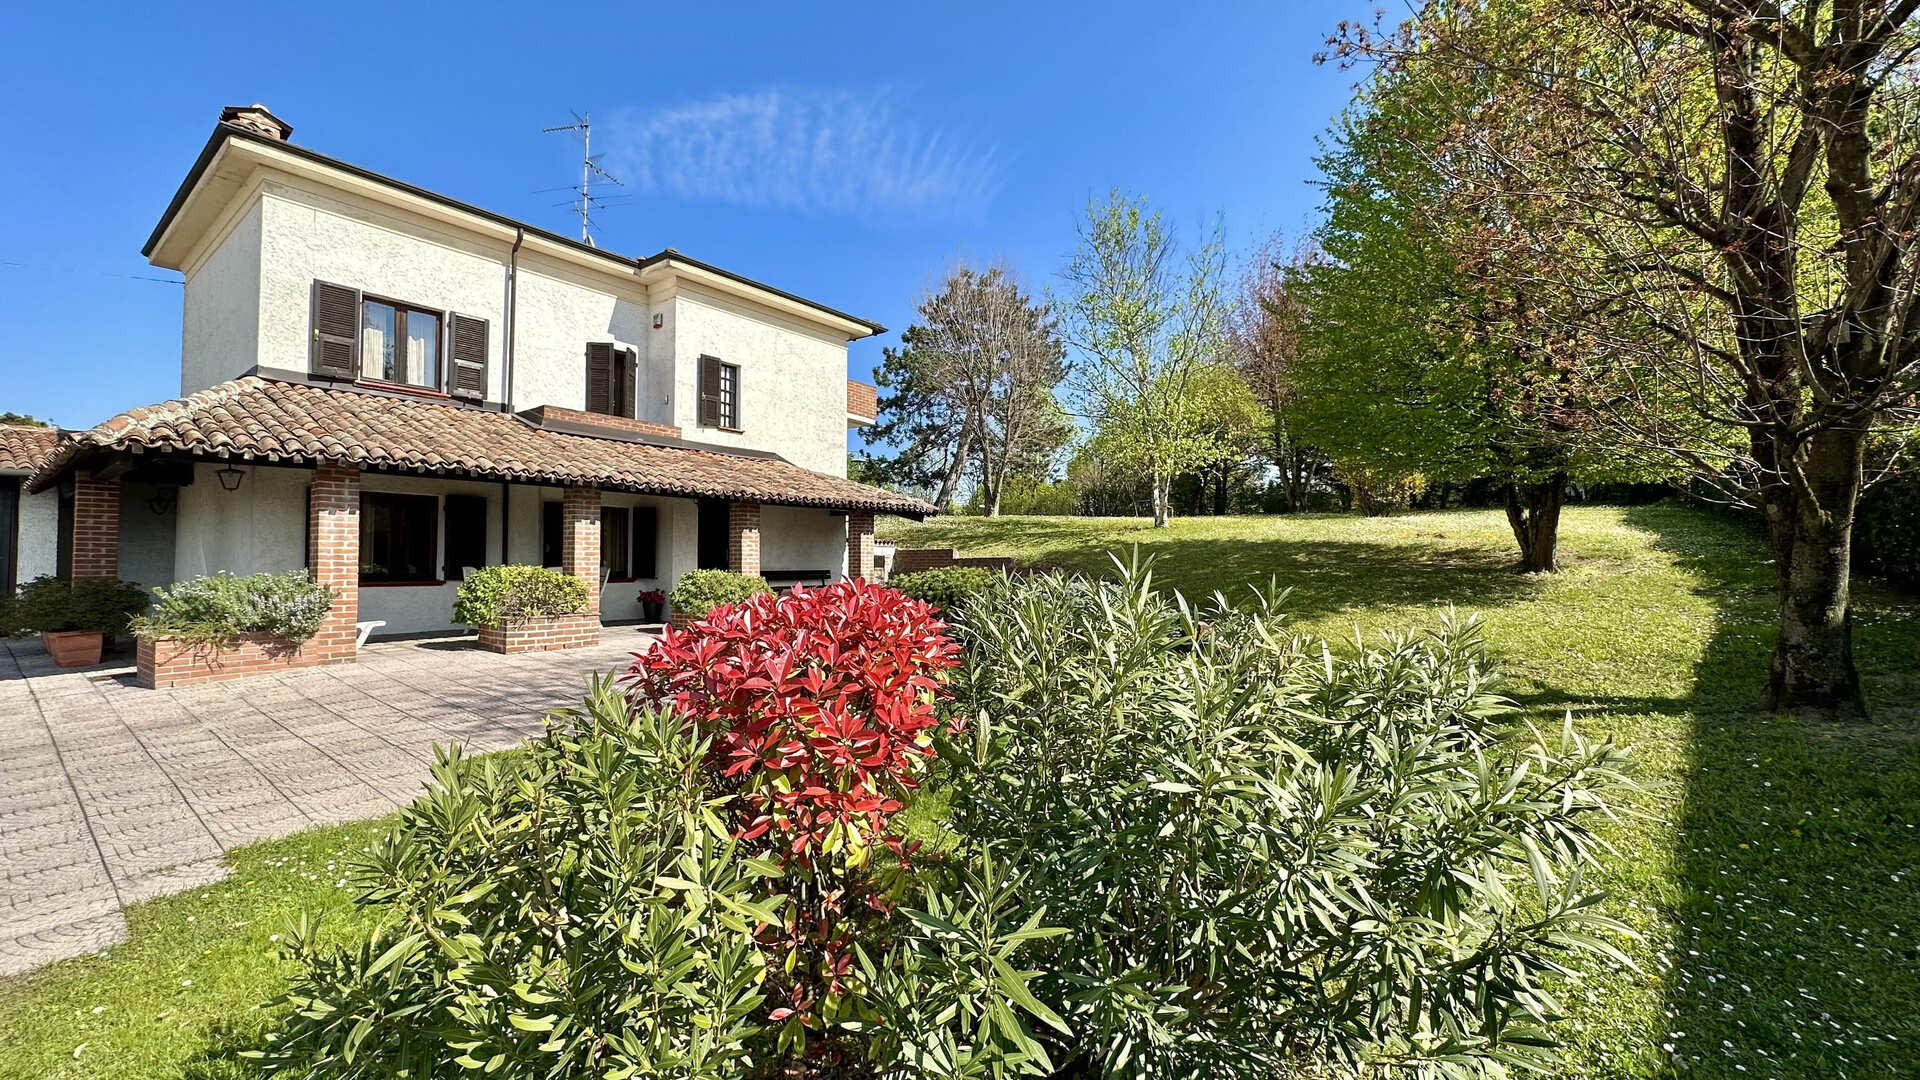 For sale villa in quiet zone Tortona Piemonte